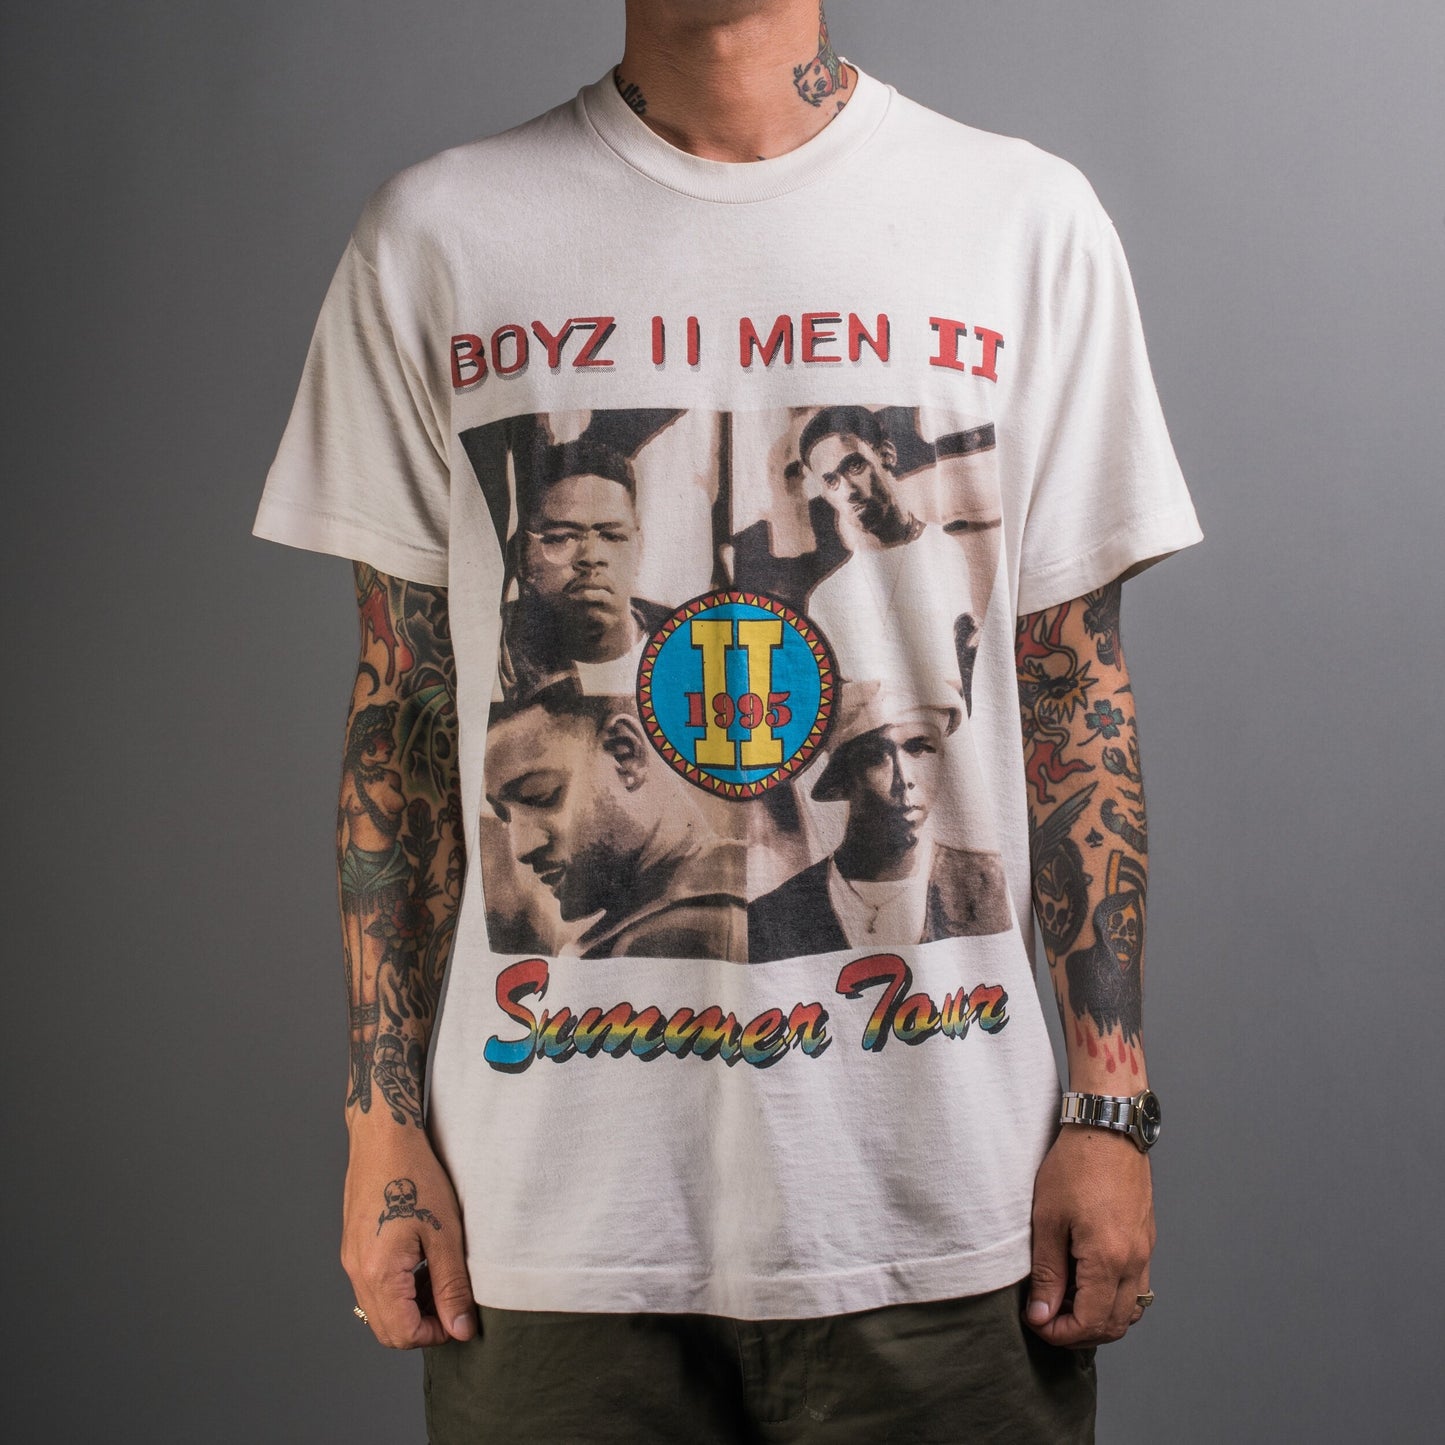 Vintage 1995 Boyz II Men II Summer Tour T-Shirt